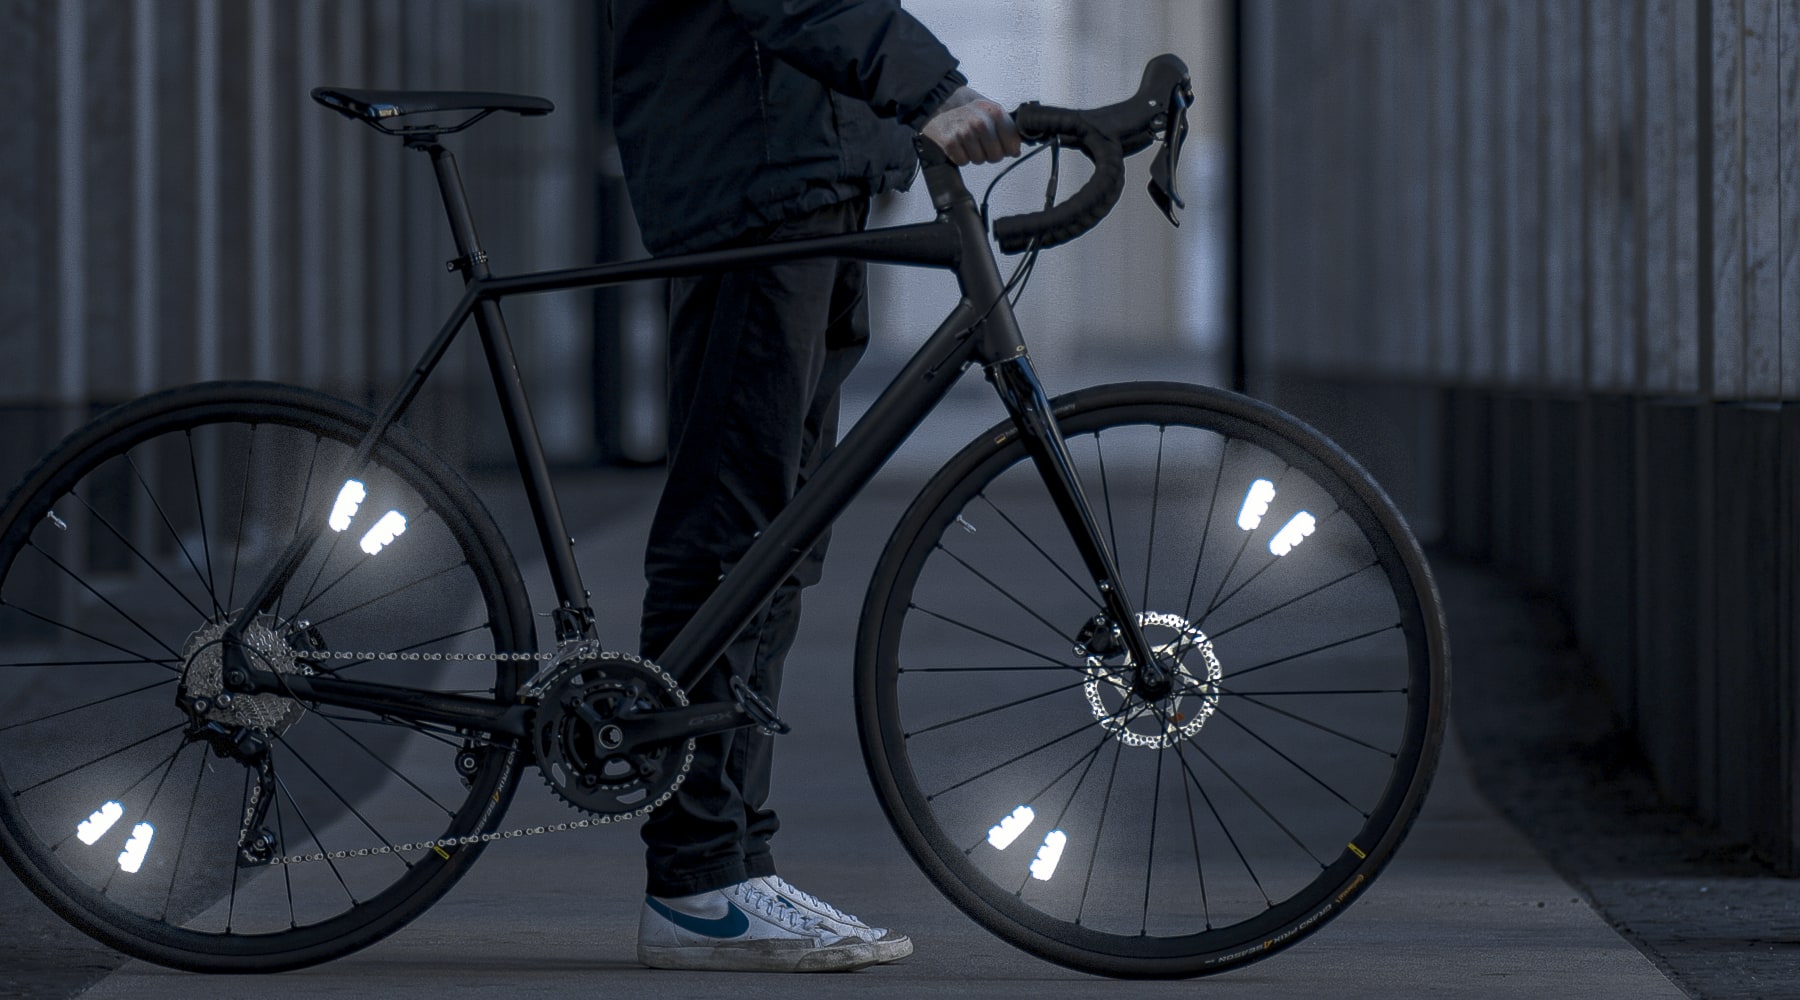 FLECTR ZERO - The performance spoke reflector for your bike